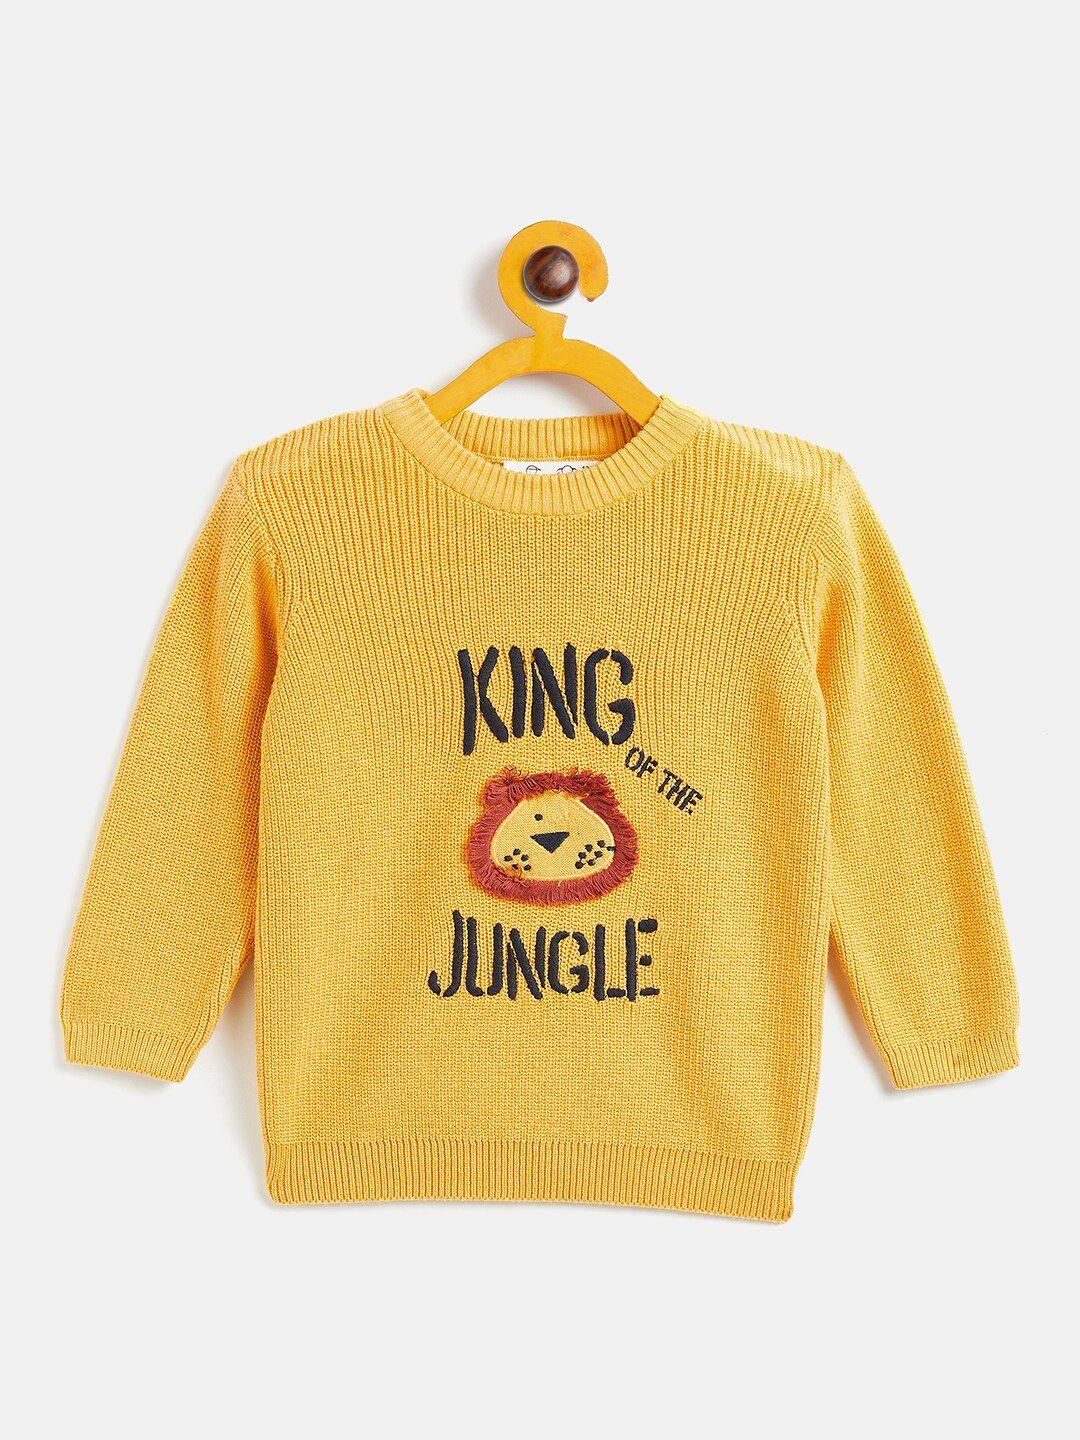 jwaaq unisex kids mustard & black embroidered printed pullover